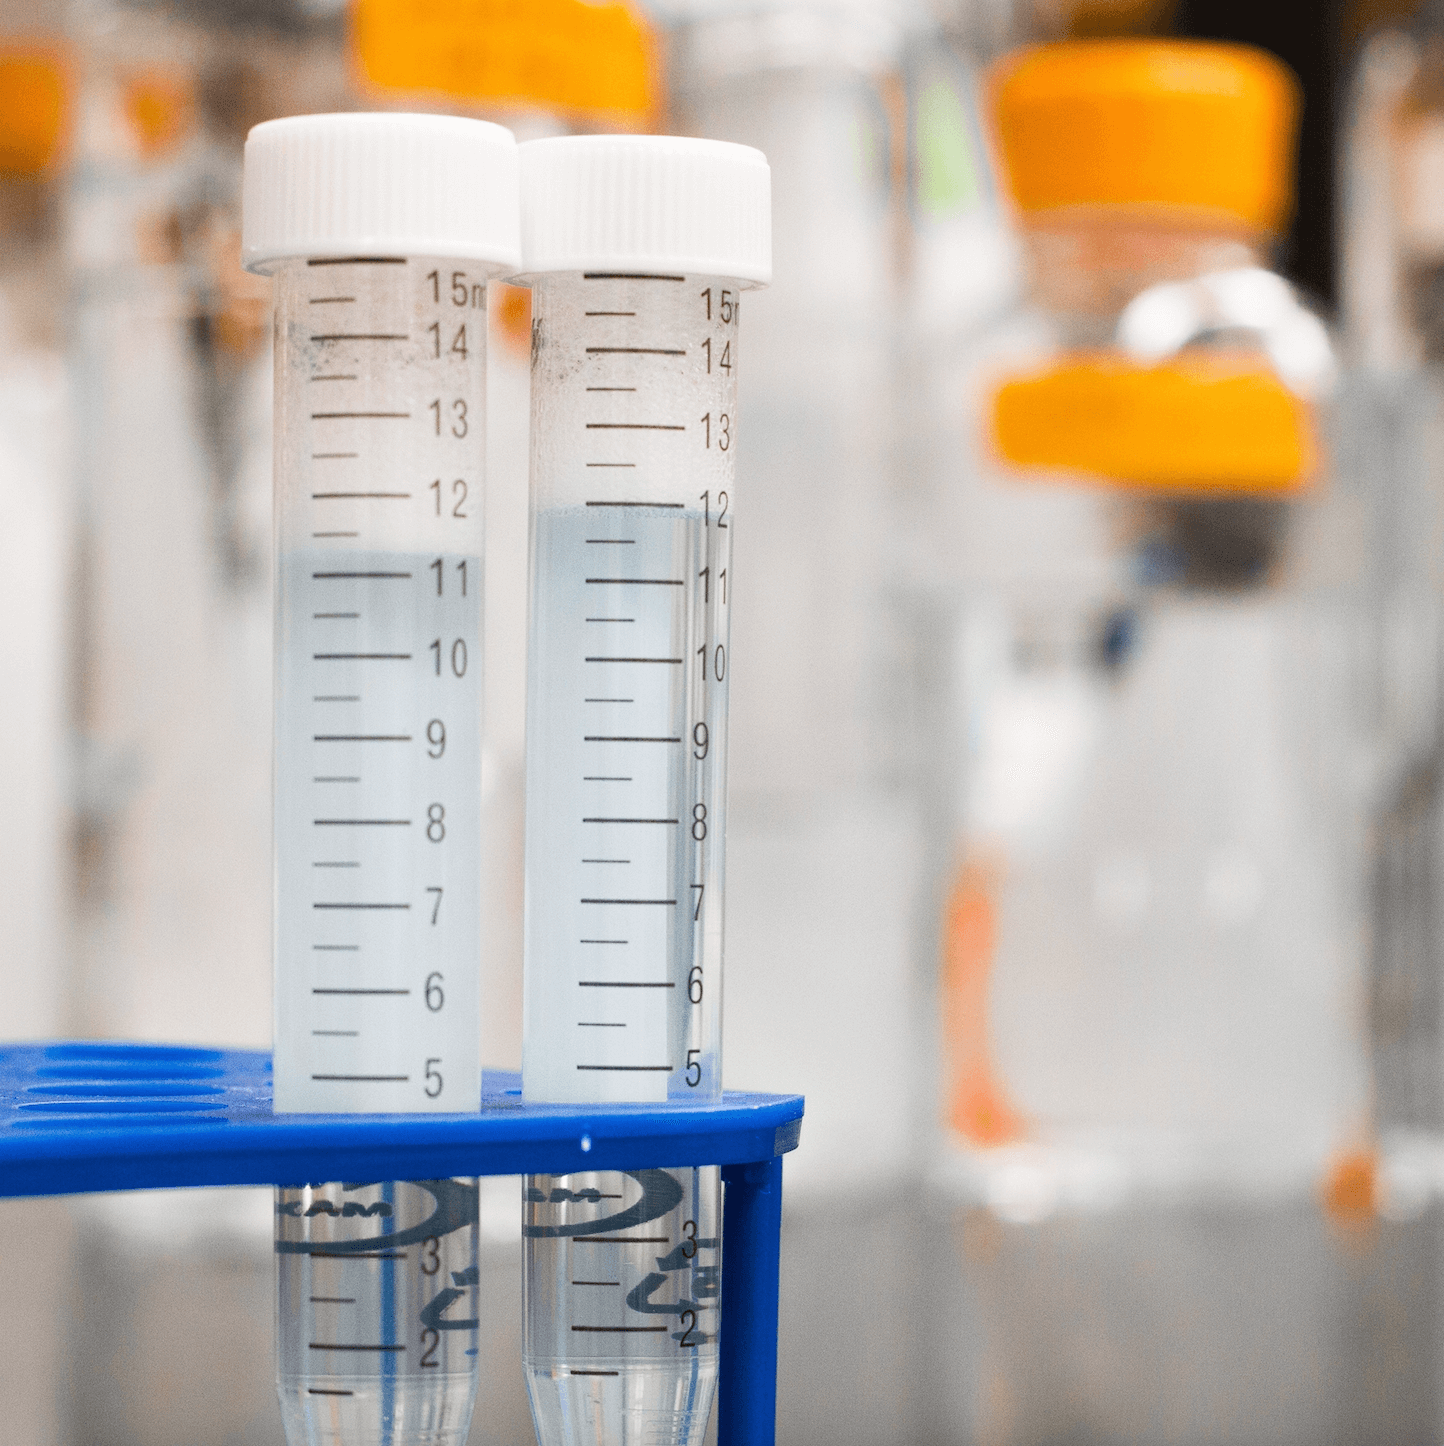 CBD oil and drug tests